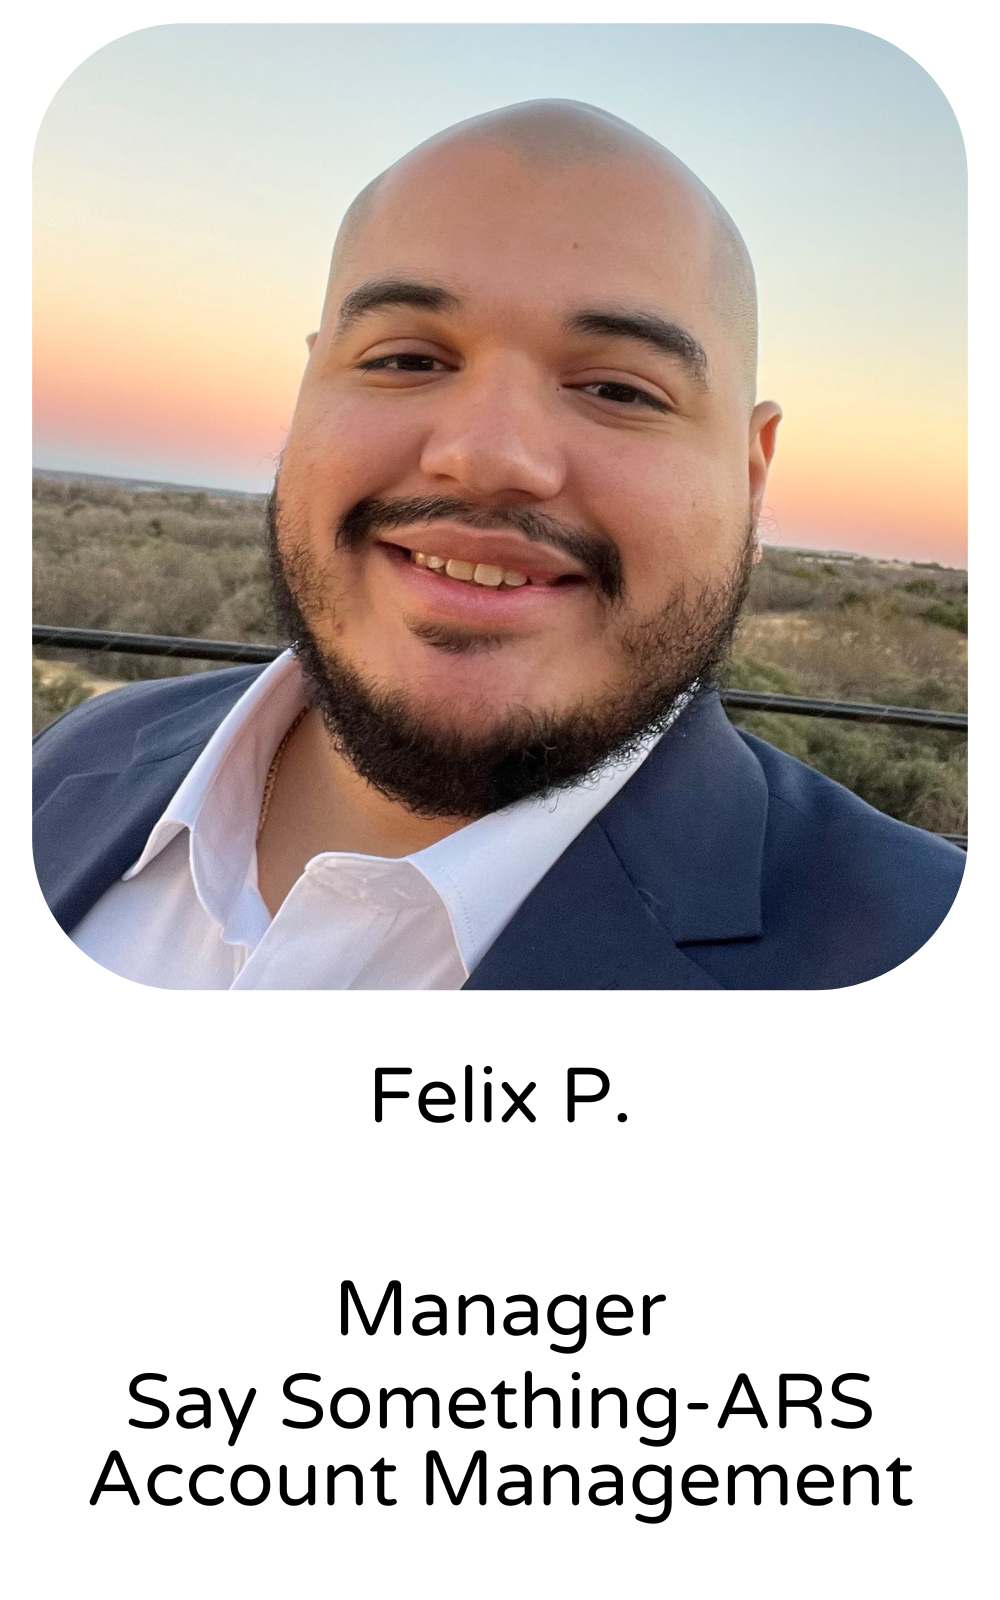 Felix P., Manager, Say Something-ARS Account Management